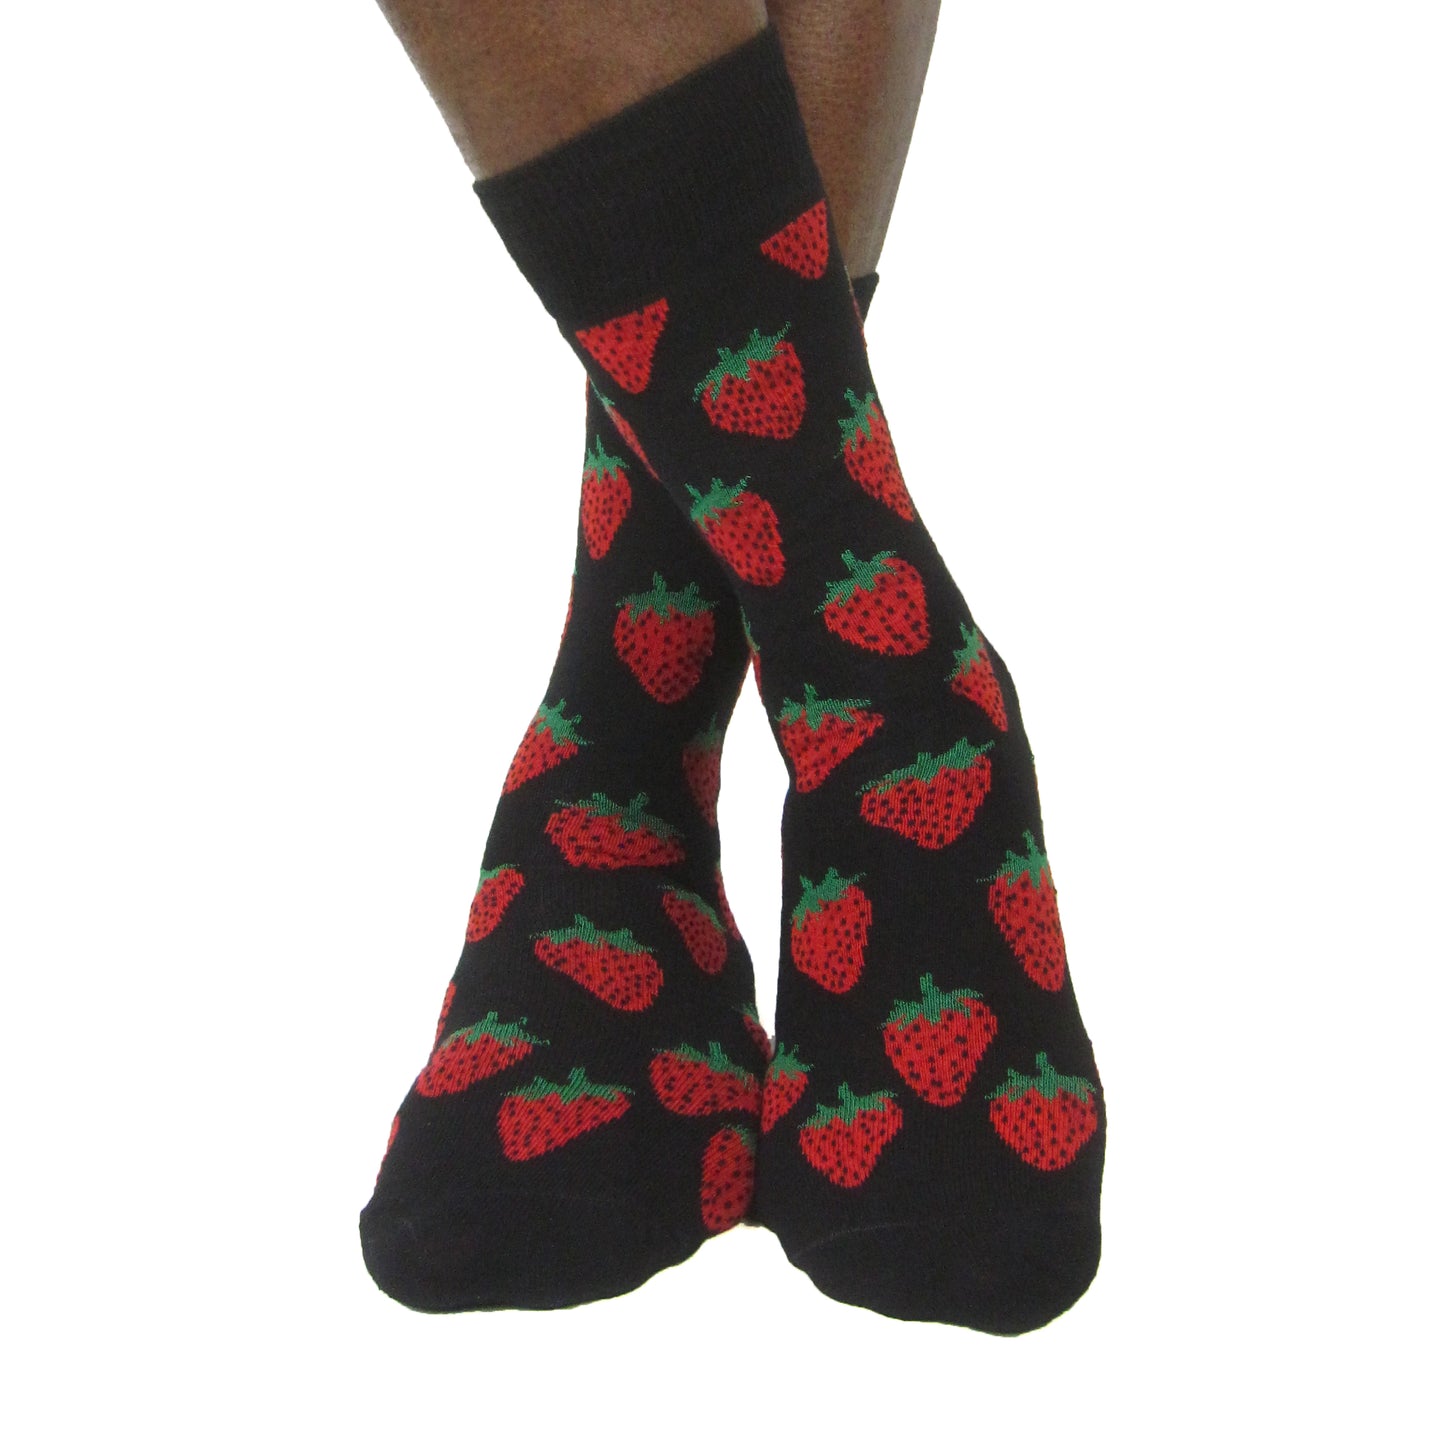 Luv Socks Men's Cotton Blend Strawberry Ankle Socks - Leggsbeautiful